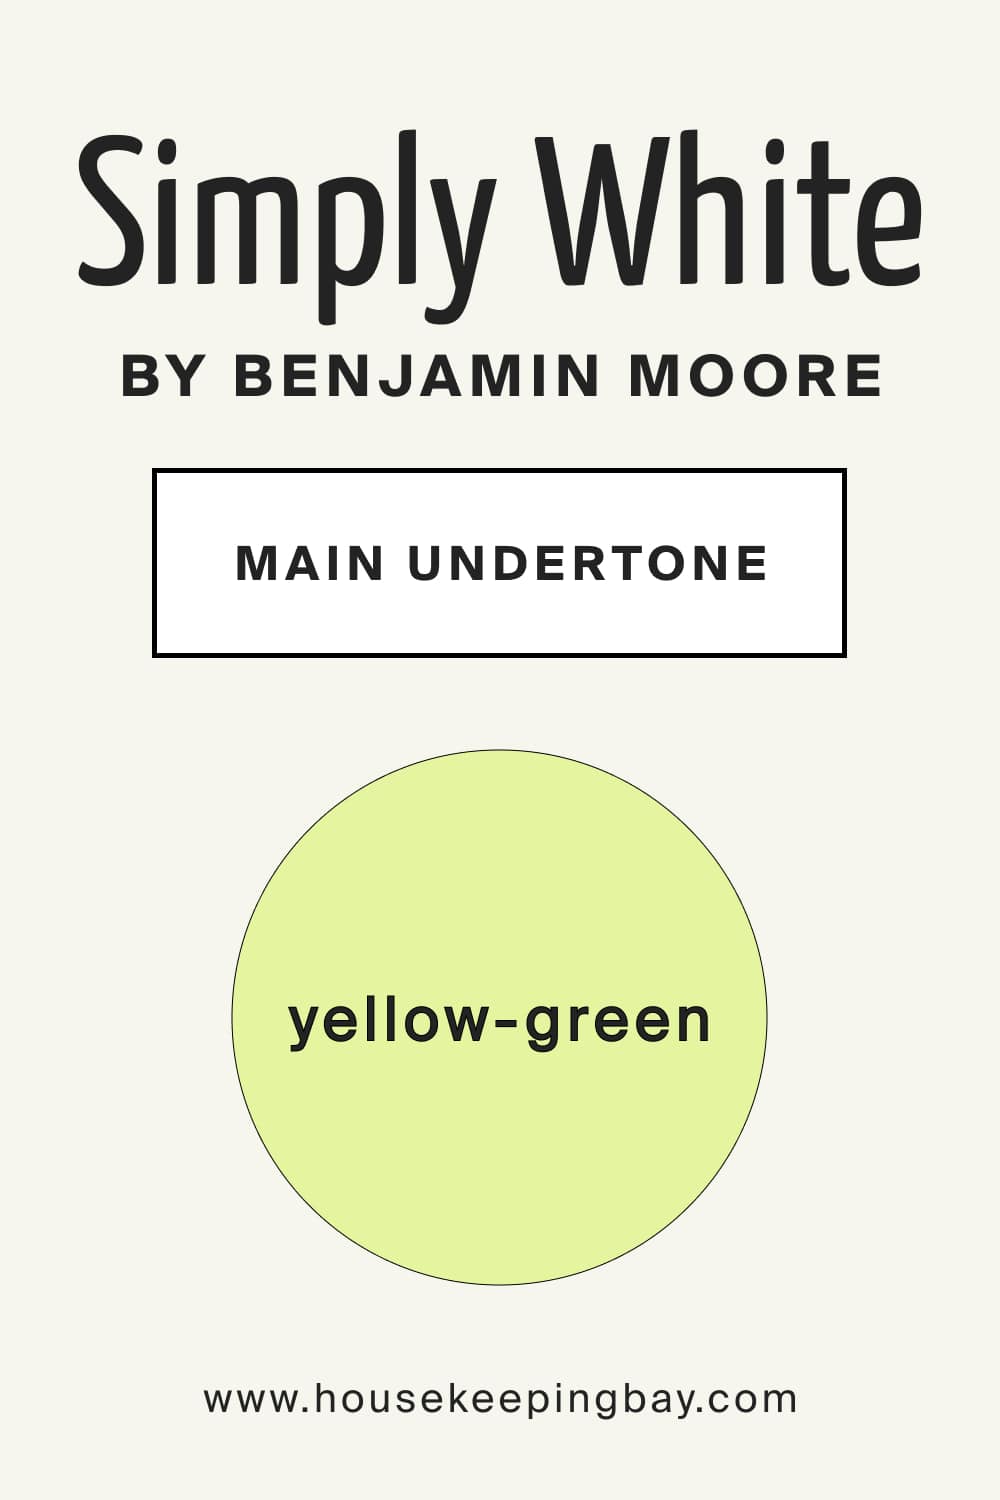 Simply White by Benjamin Moore Main Undertone